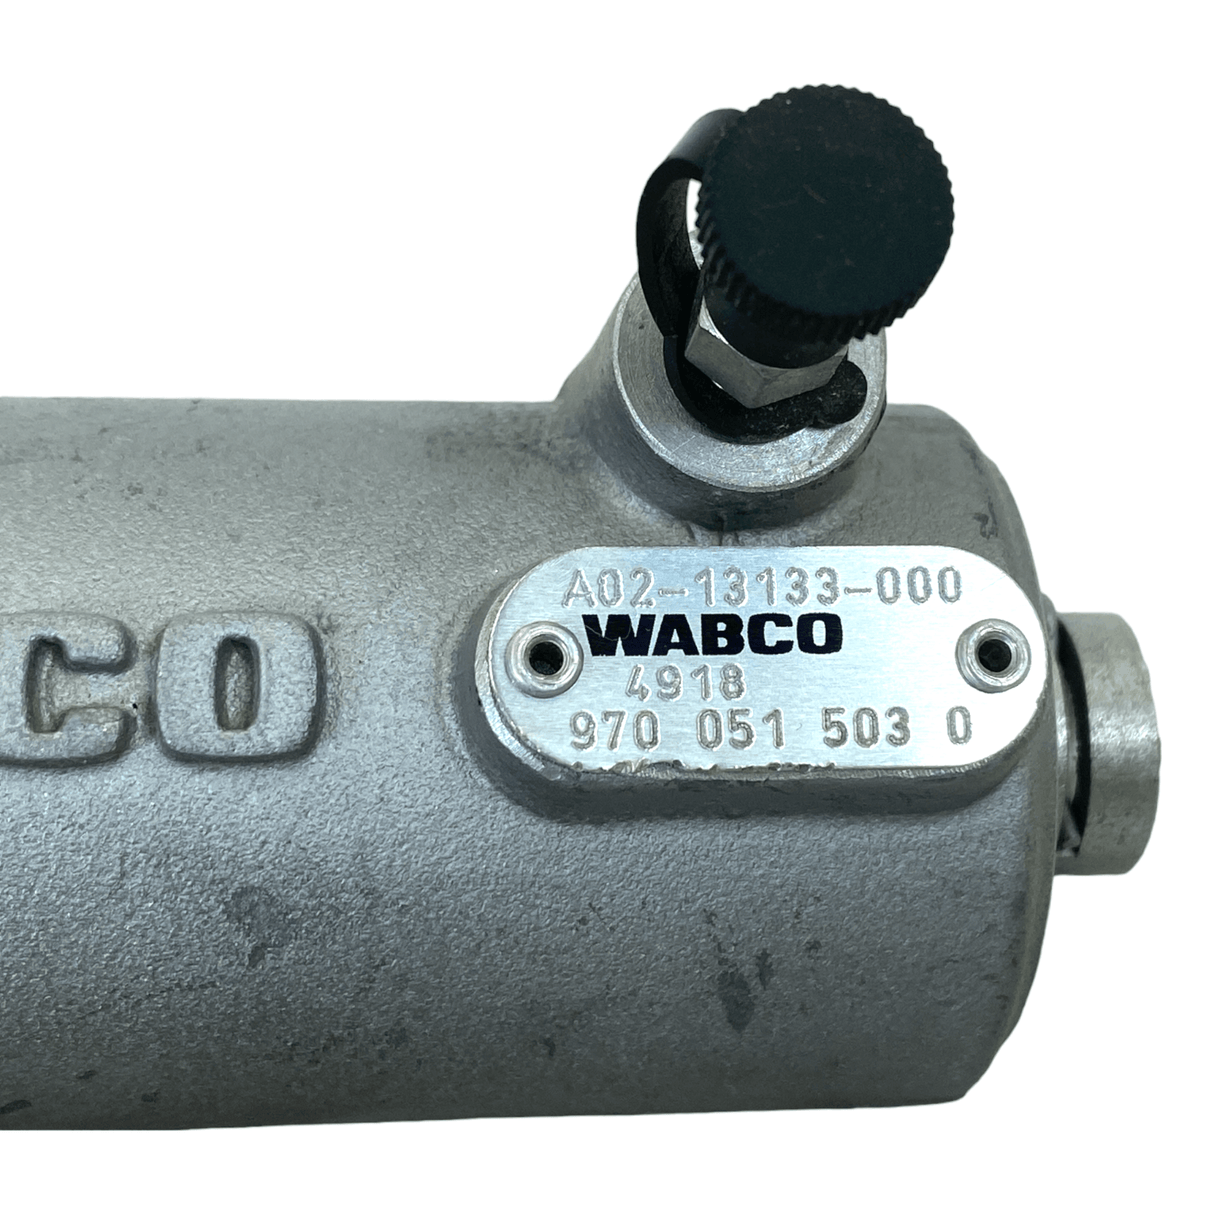 S9700515030 Genuine Meritor Wabco® Air Sys Servo Clutch Slave Cylinder - Truck To Trailer